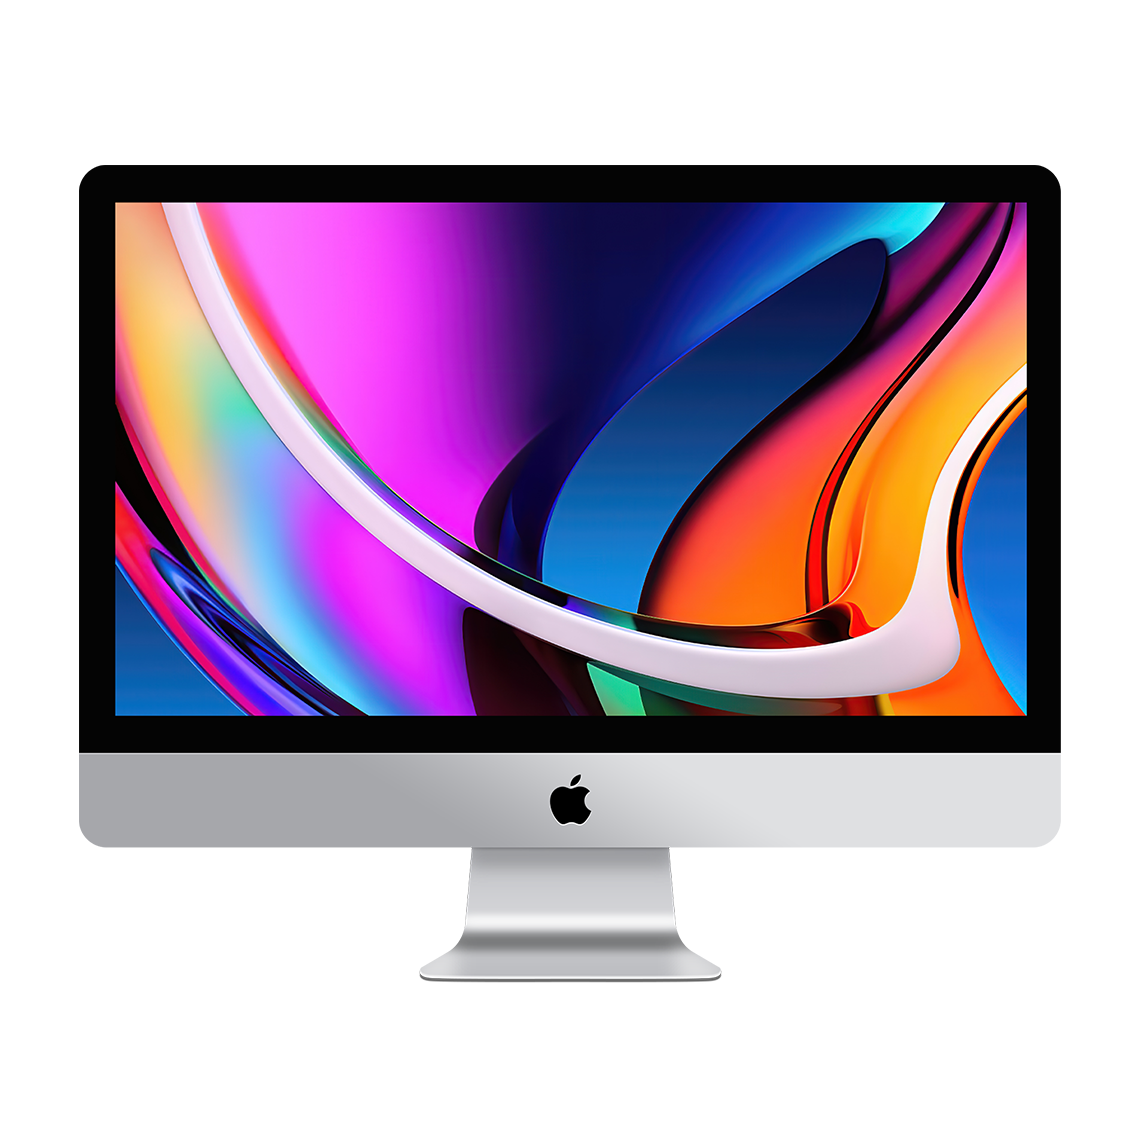 2020 iMac 27-inch 5K - Intel Core i9, 128GB, 512GB Flash, Radeon Pro 5700 8GB, Grade A